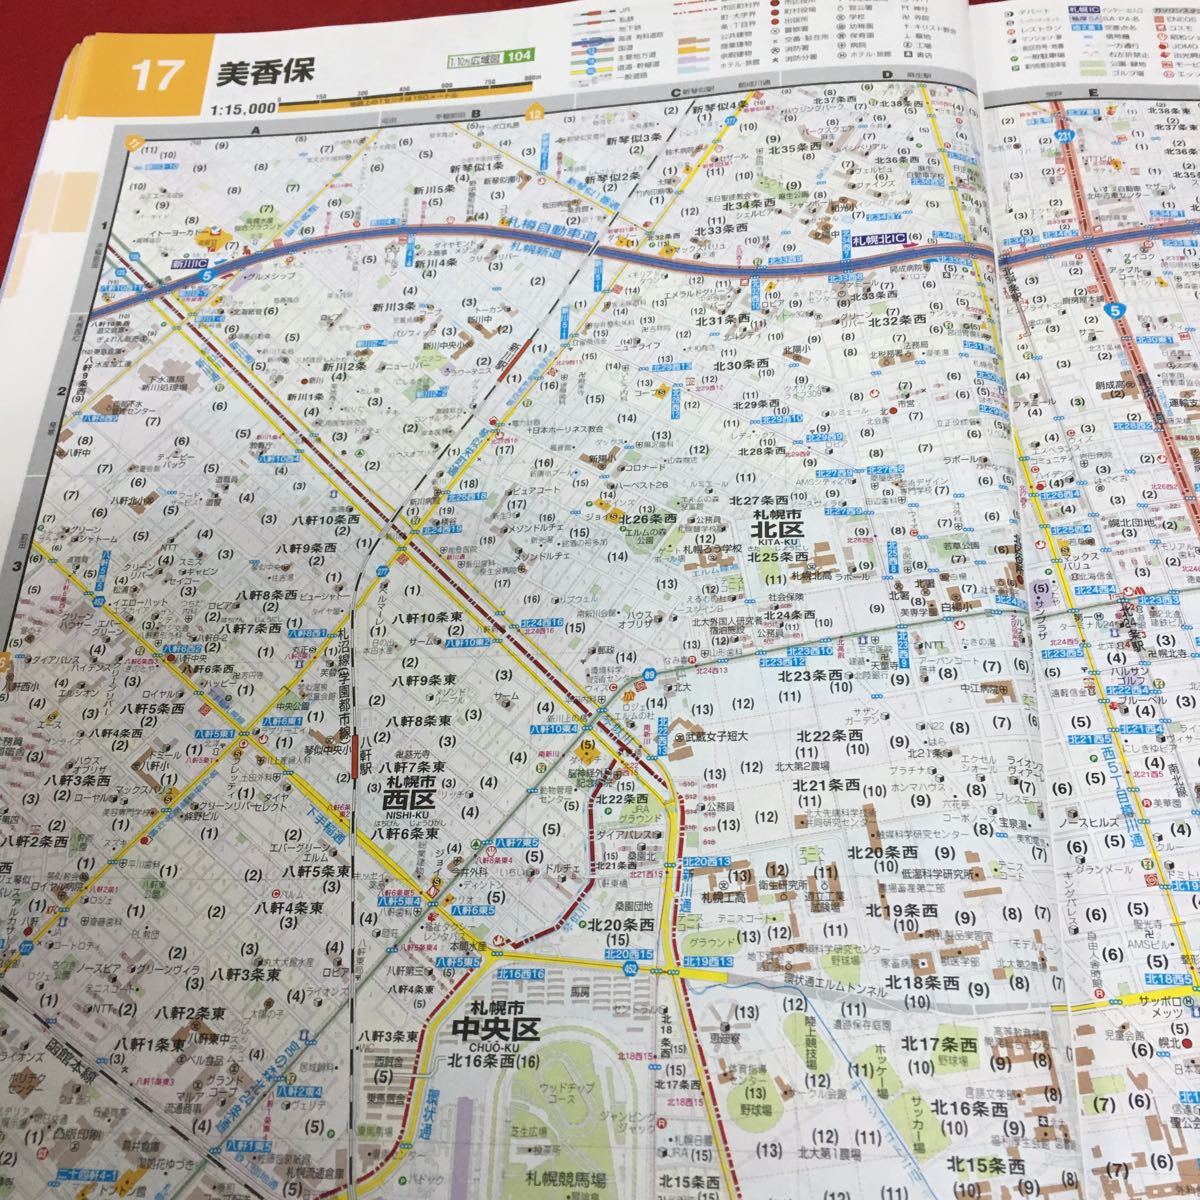 b-509 super Mapple Hokkaido карта дорог . документ фирма *4